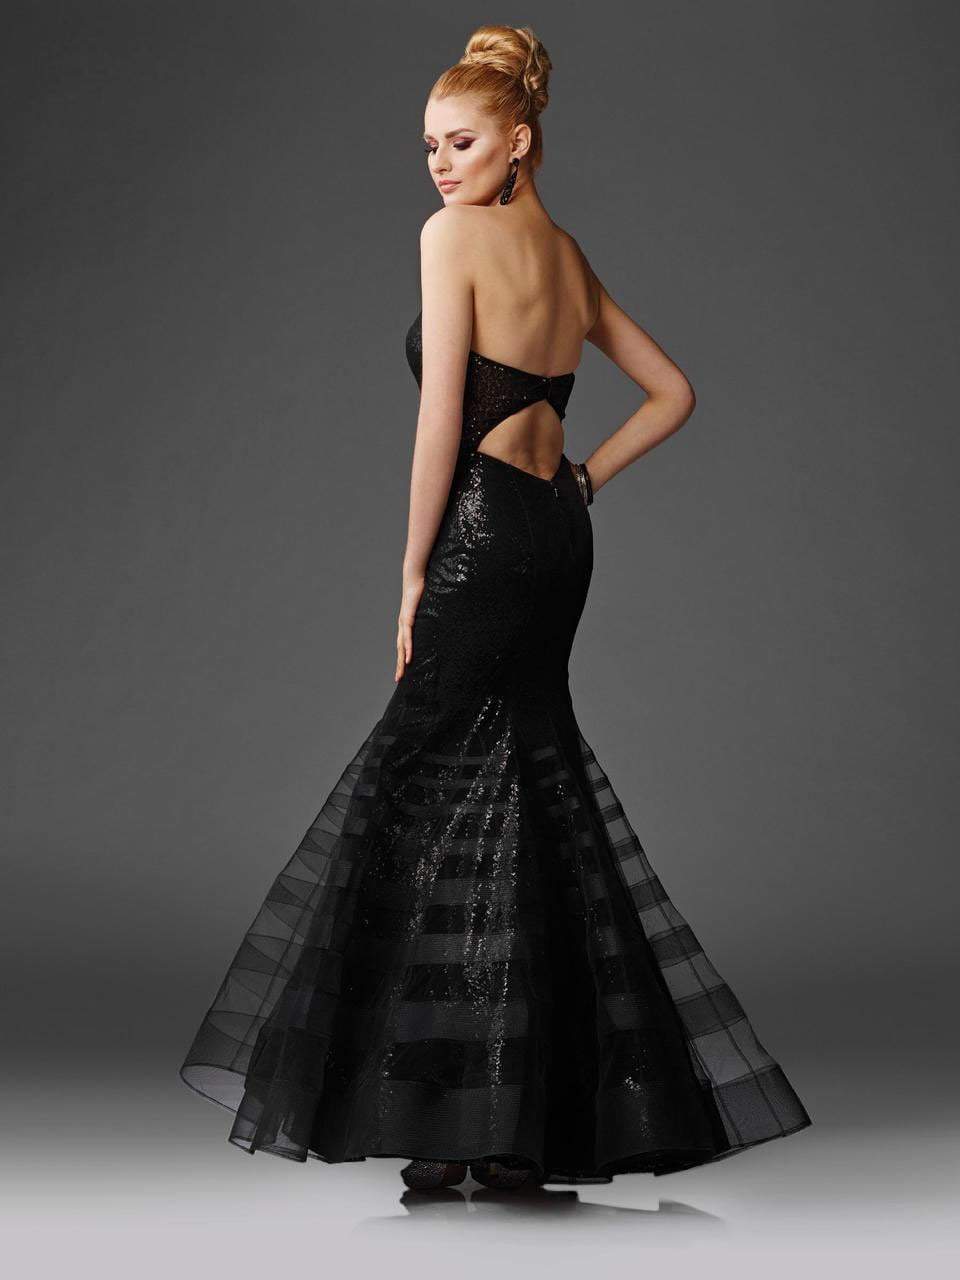 Clarisse - 4950 Strapless Sequined Mermaid Dress in Black